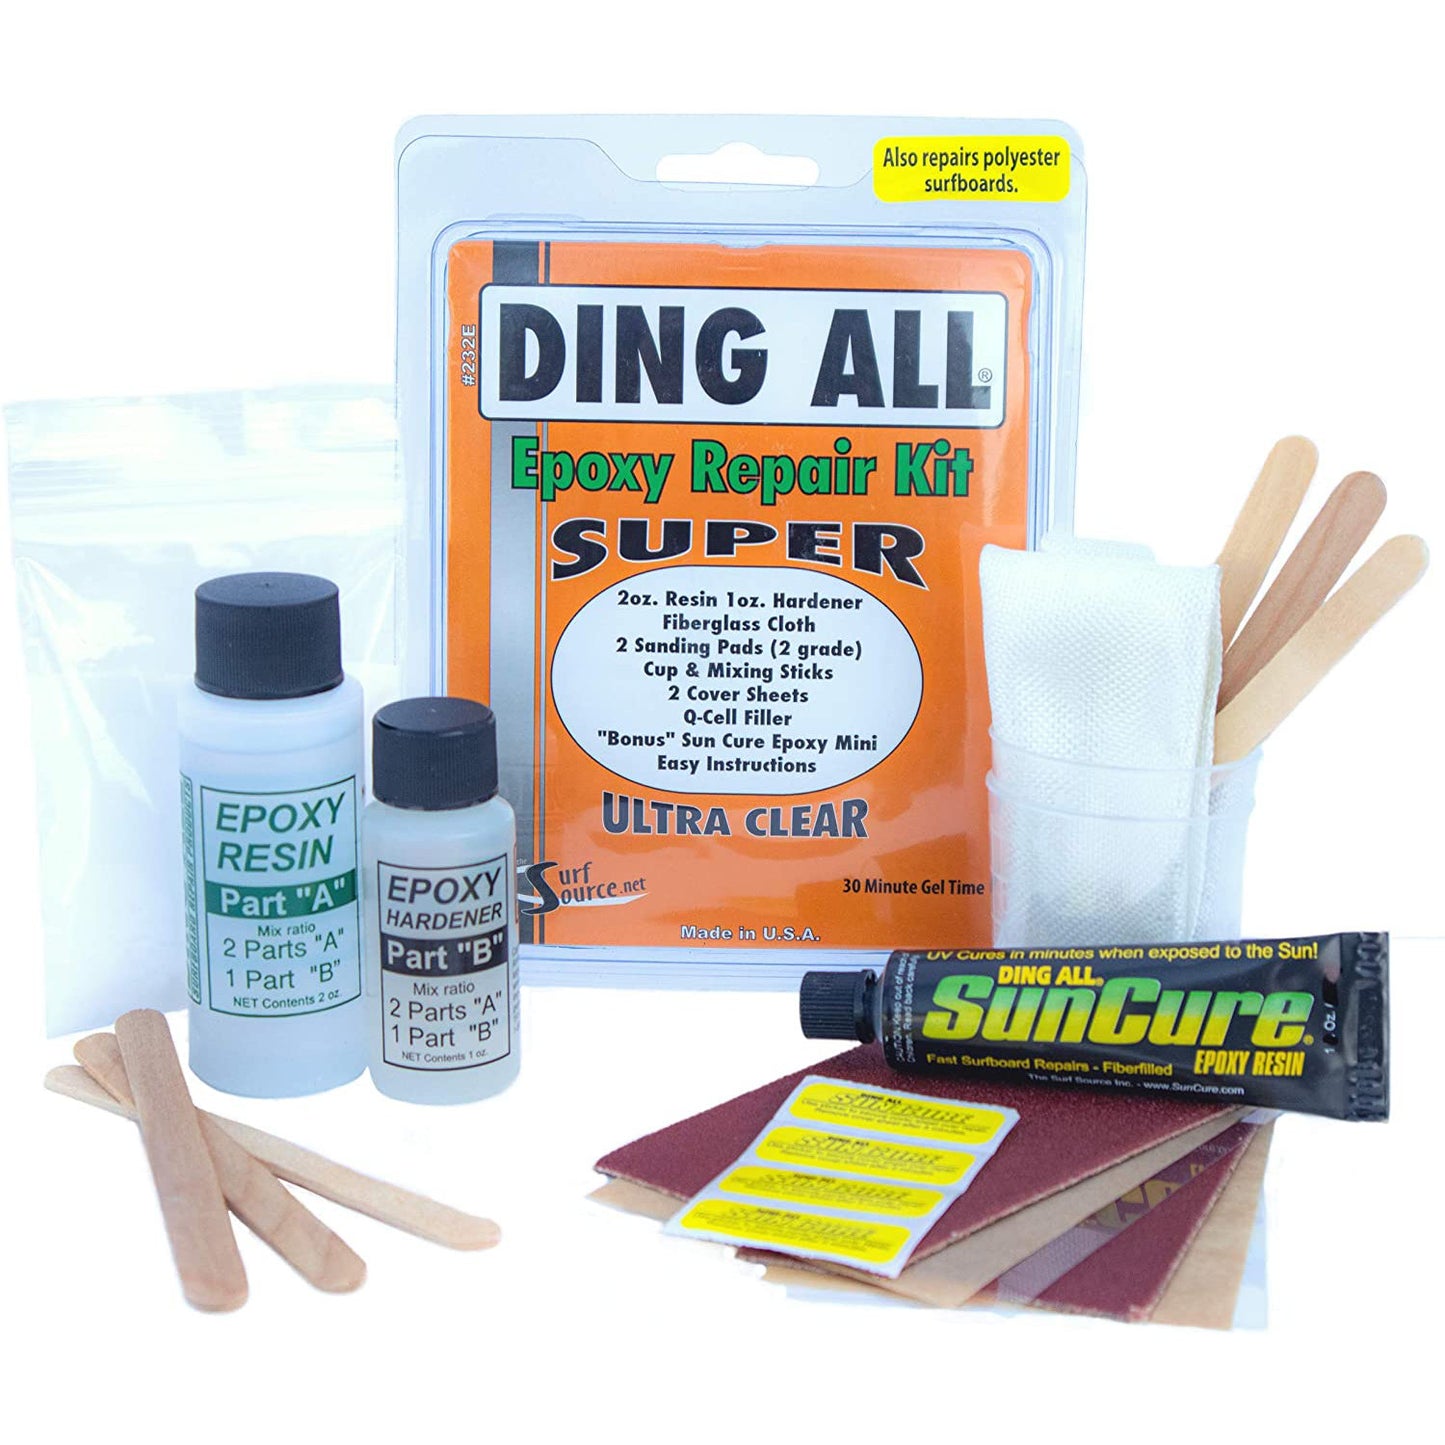 
                  
                     Ding All Super Epoxy Repair kit
                  
                